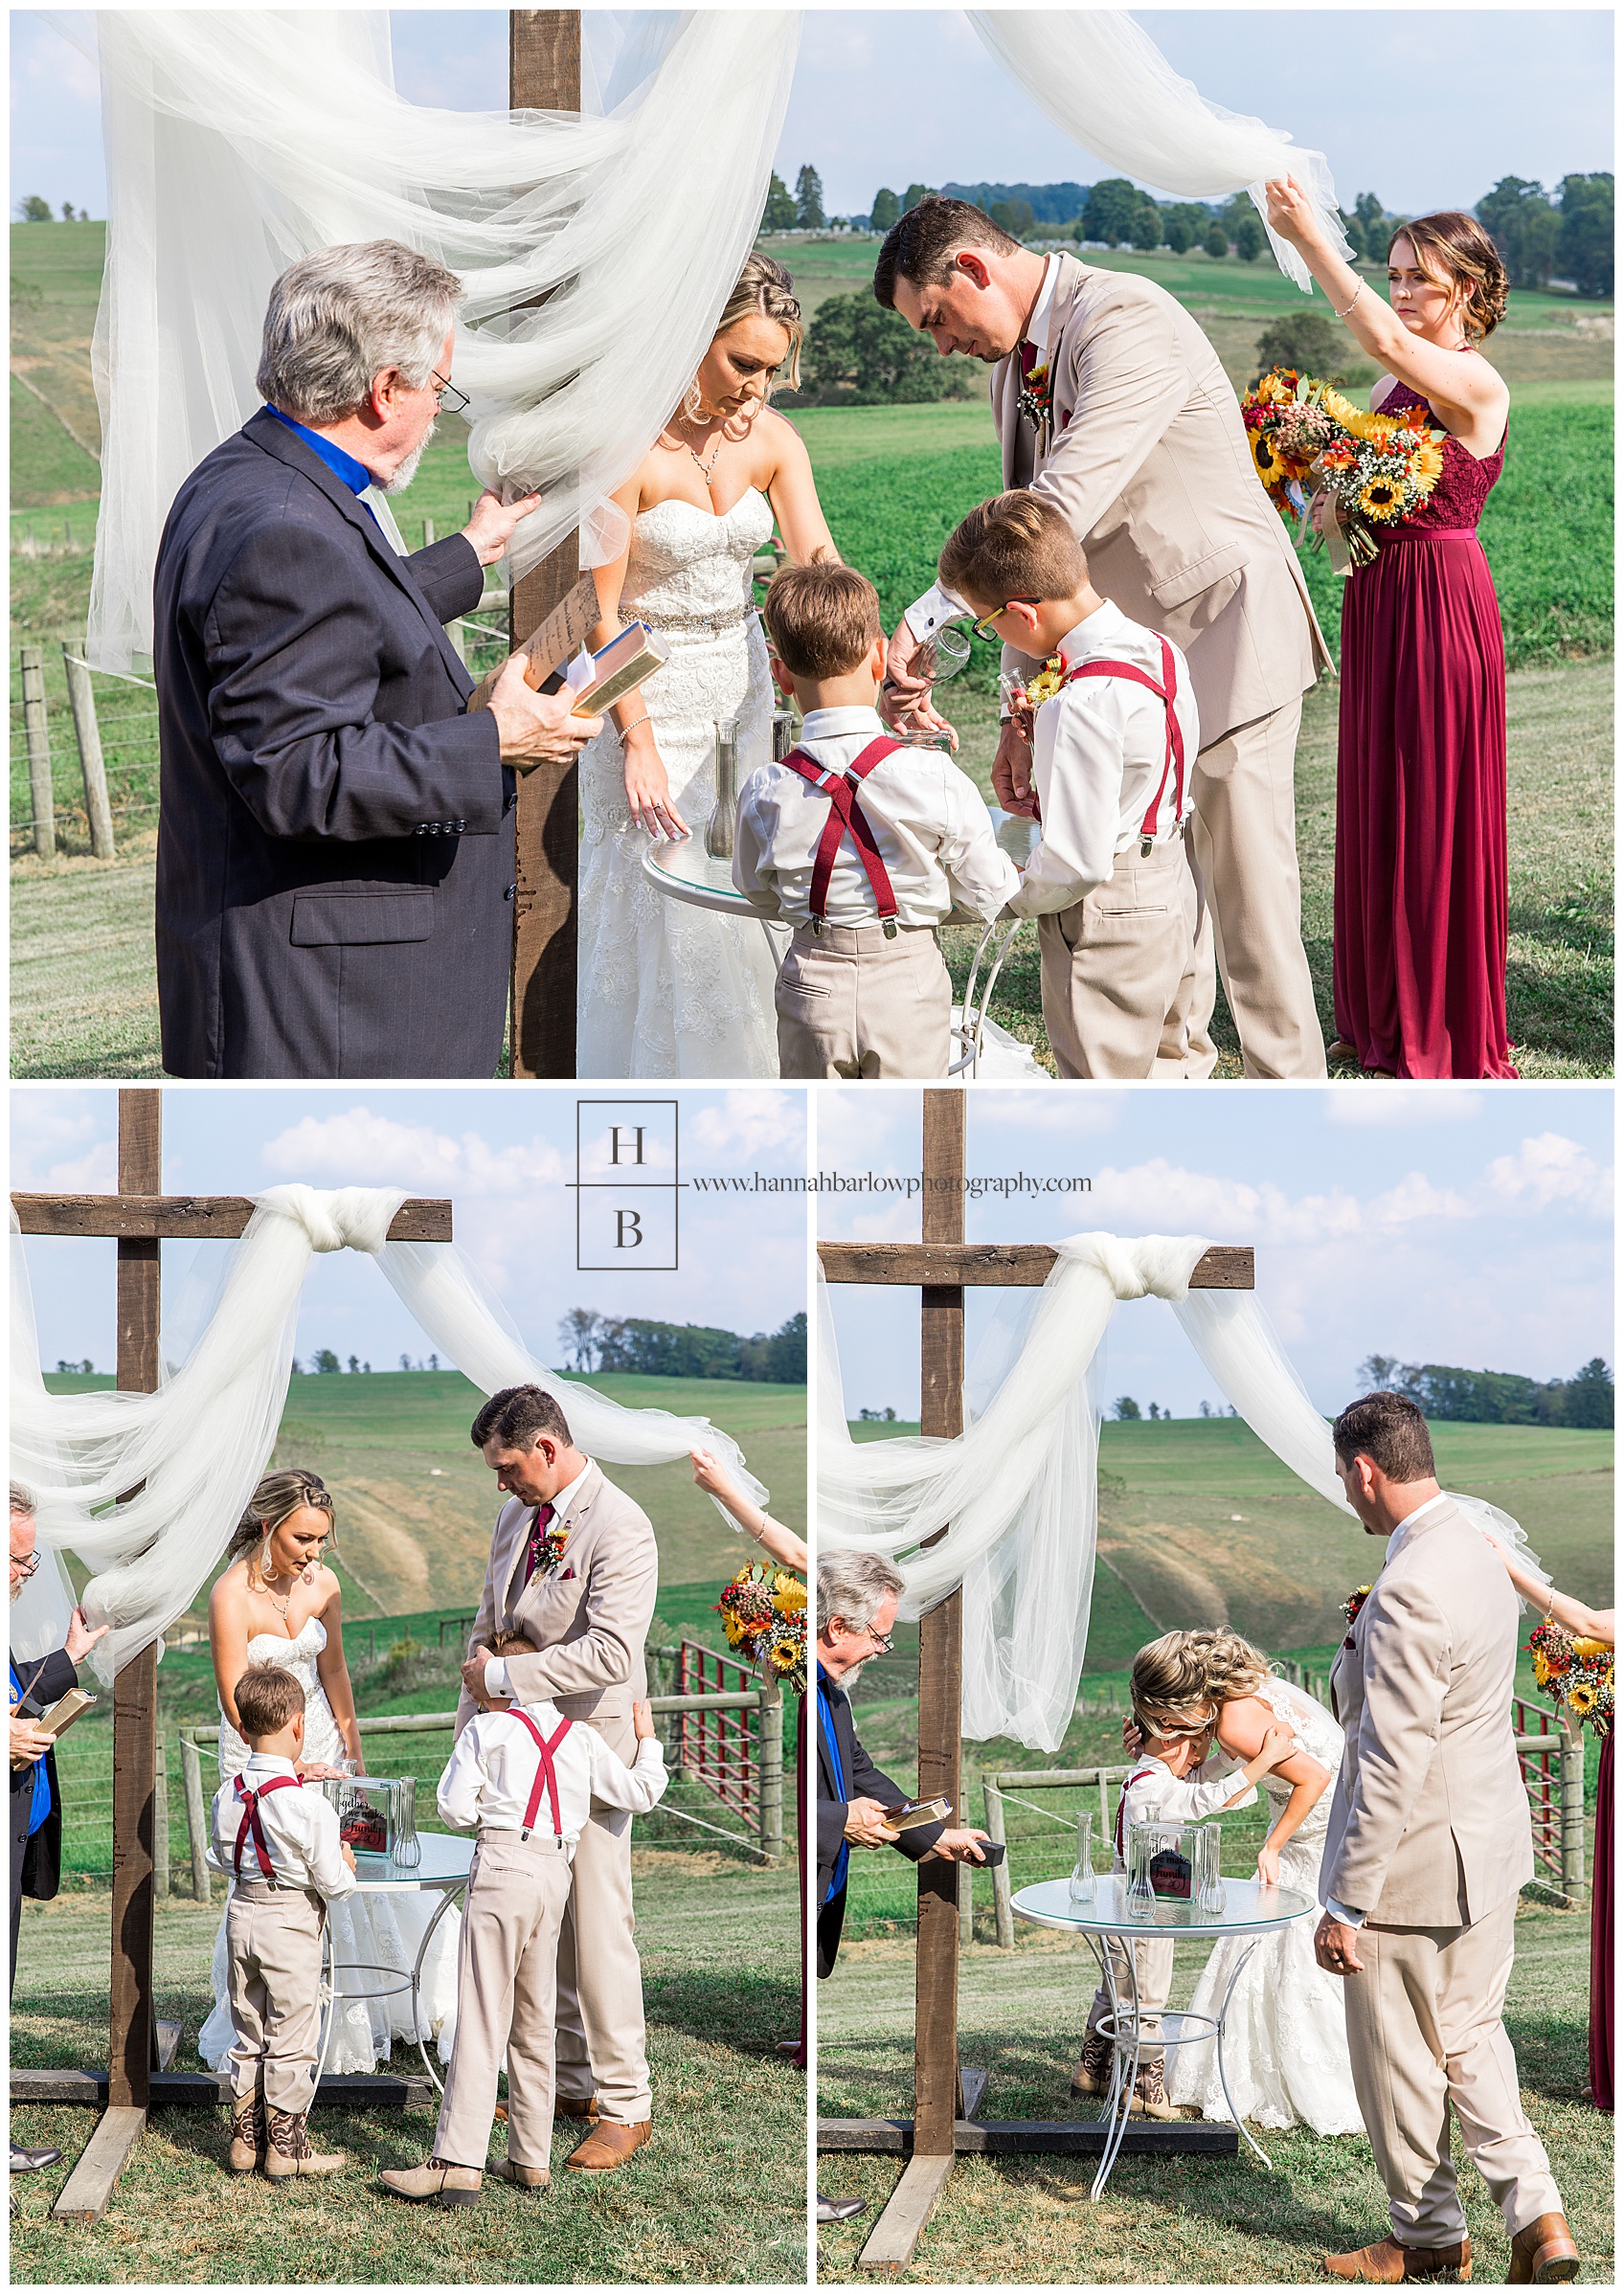 Wedding Sand Ceremony at Heaven Sent Farms